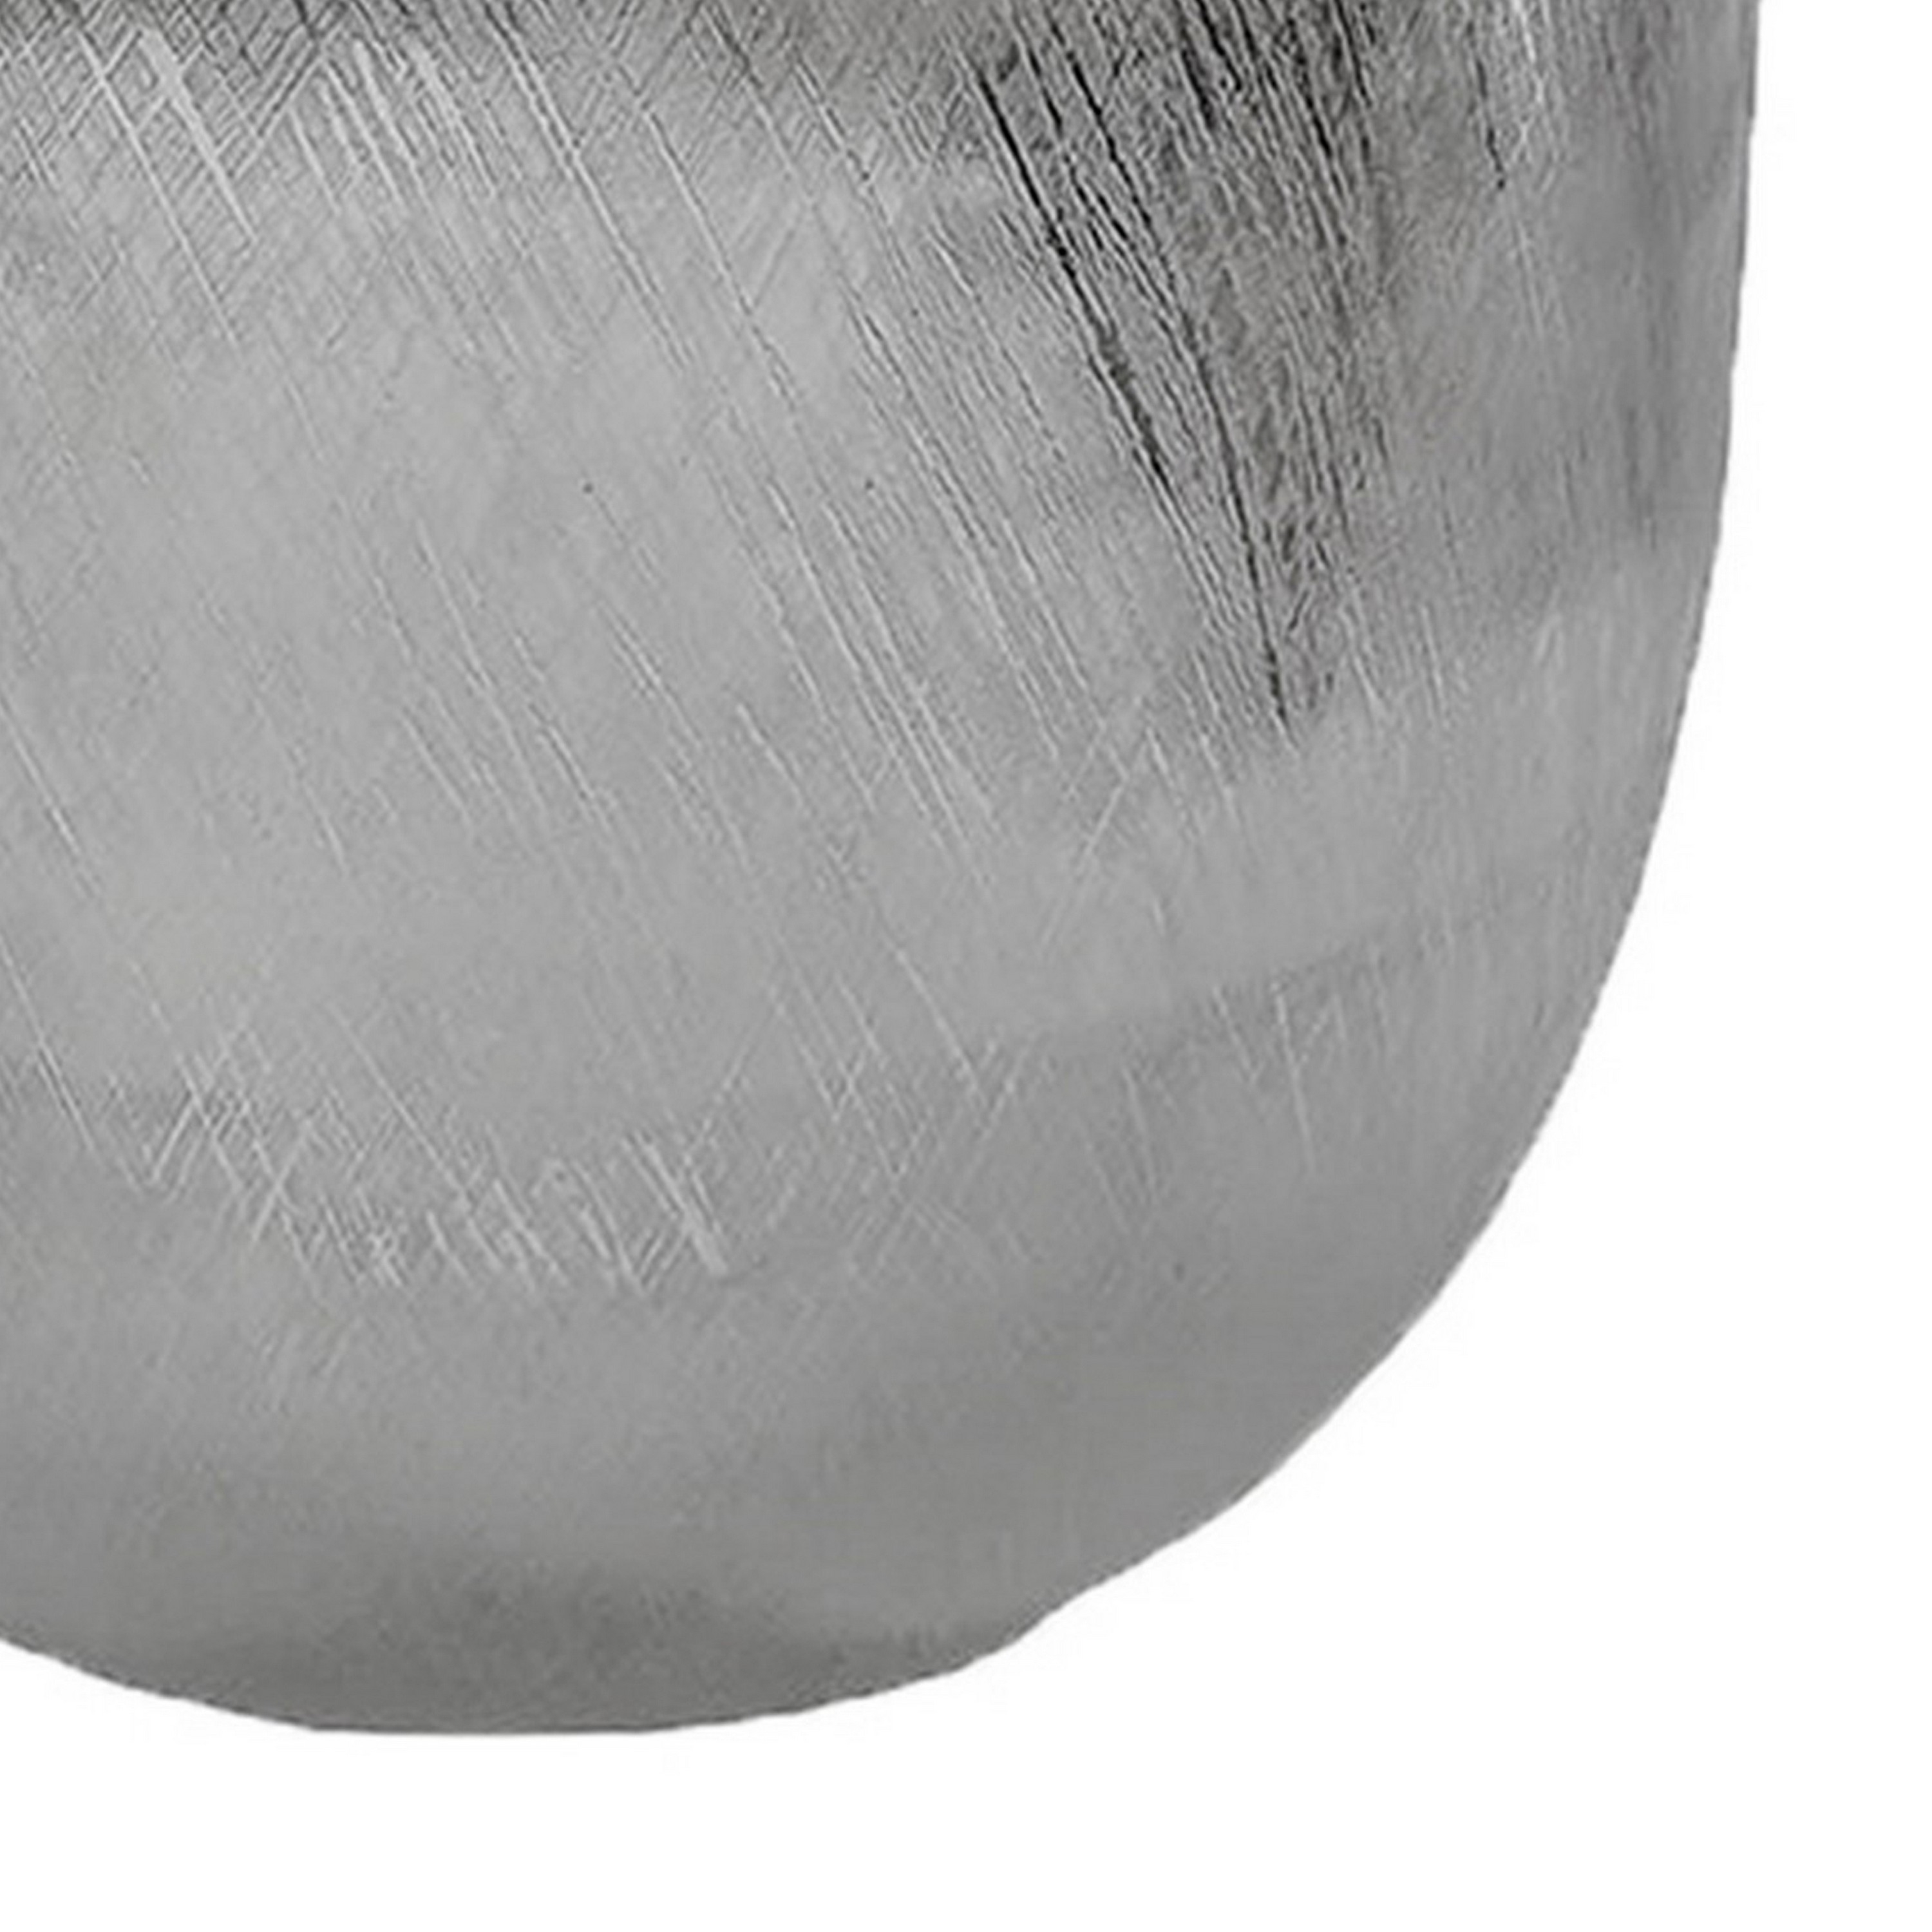 Chan 15 Inch Modern Metal Vase, Curved Shape, Elegant Metallic Silver - Saltoro Sherpi